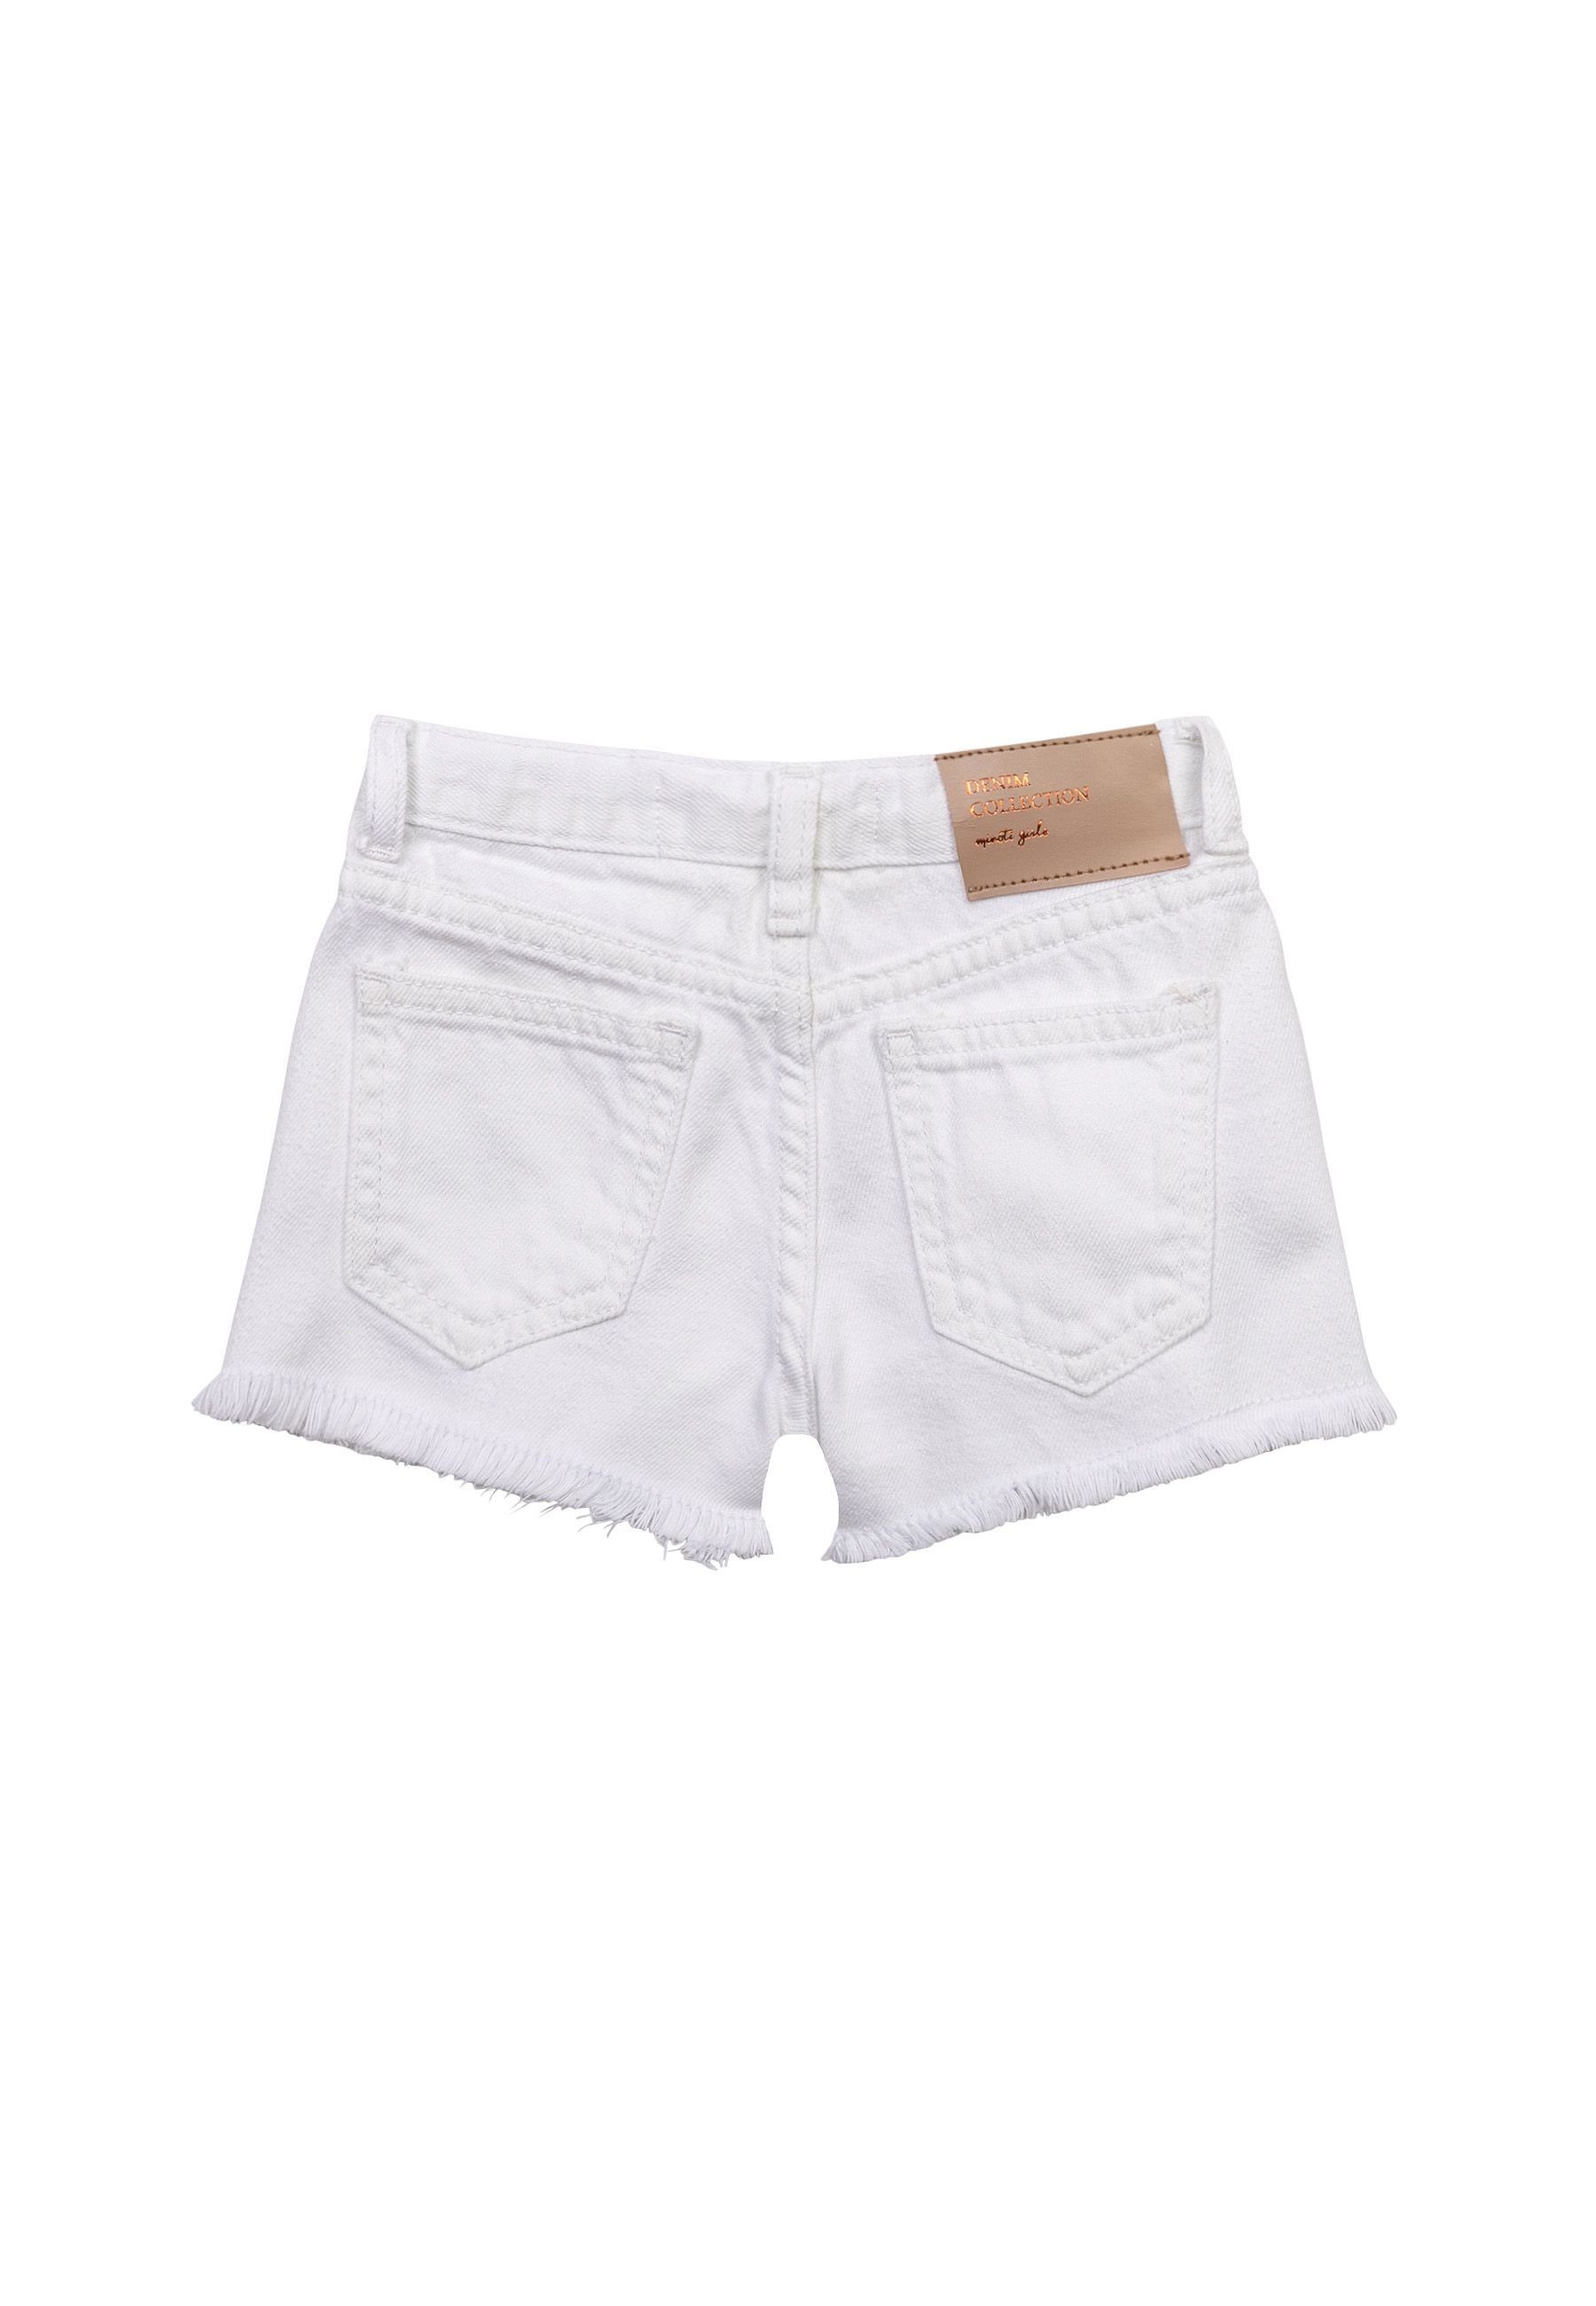 Kurze Shorts Jeansshorts (1y-14y) MINOTI Jeans Denim-Weiß